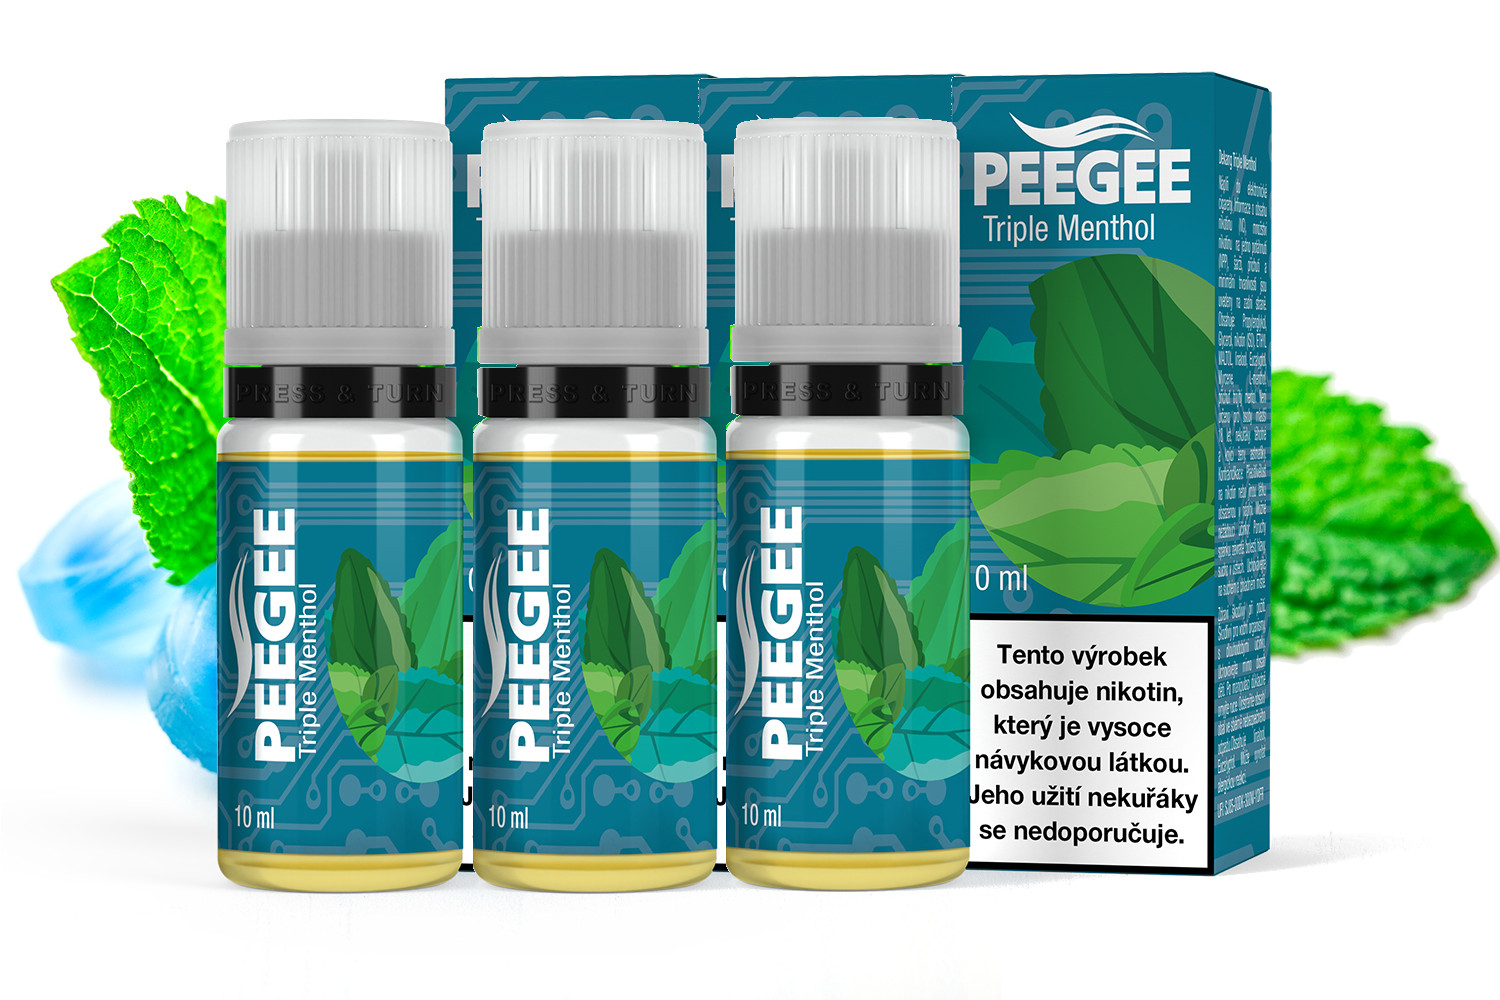 PEEGEE - Trojitý mentol (Triple Menthol) 3x10ml Obsah nikotinu: 6mg